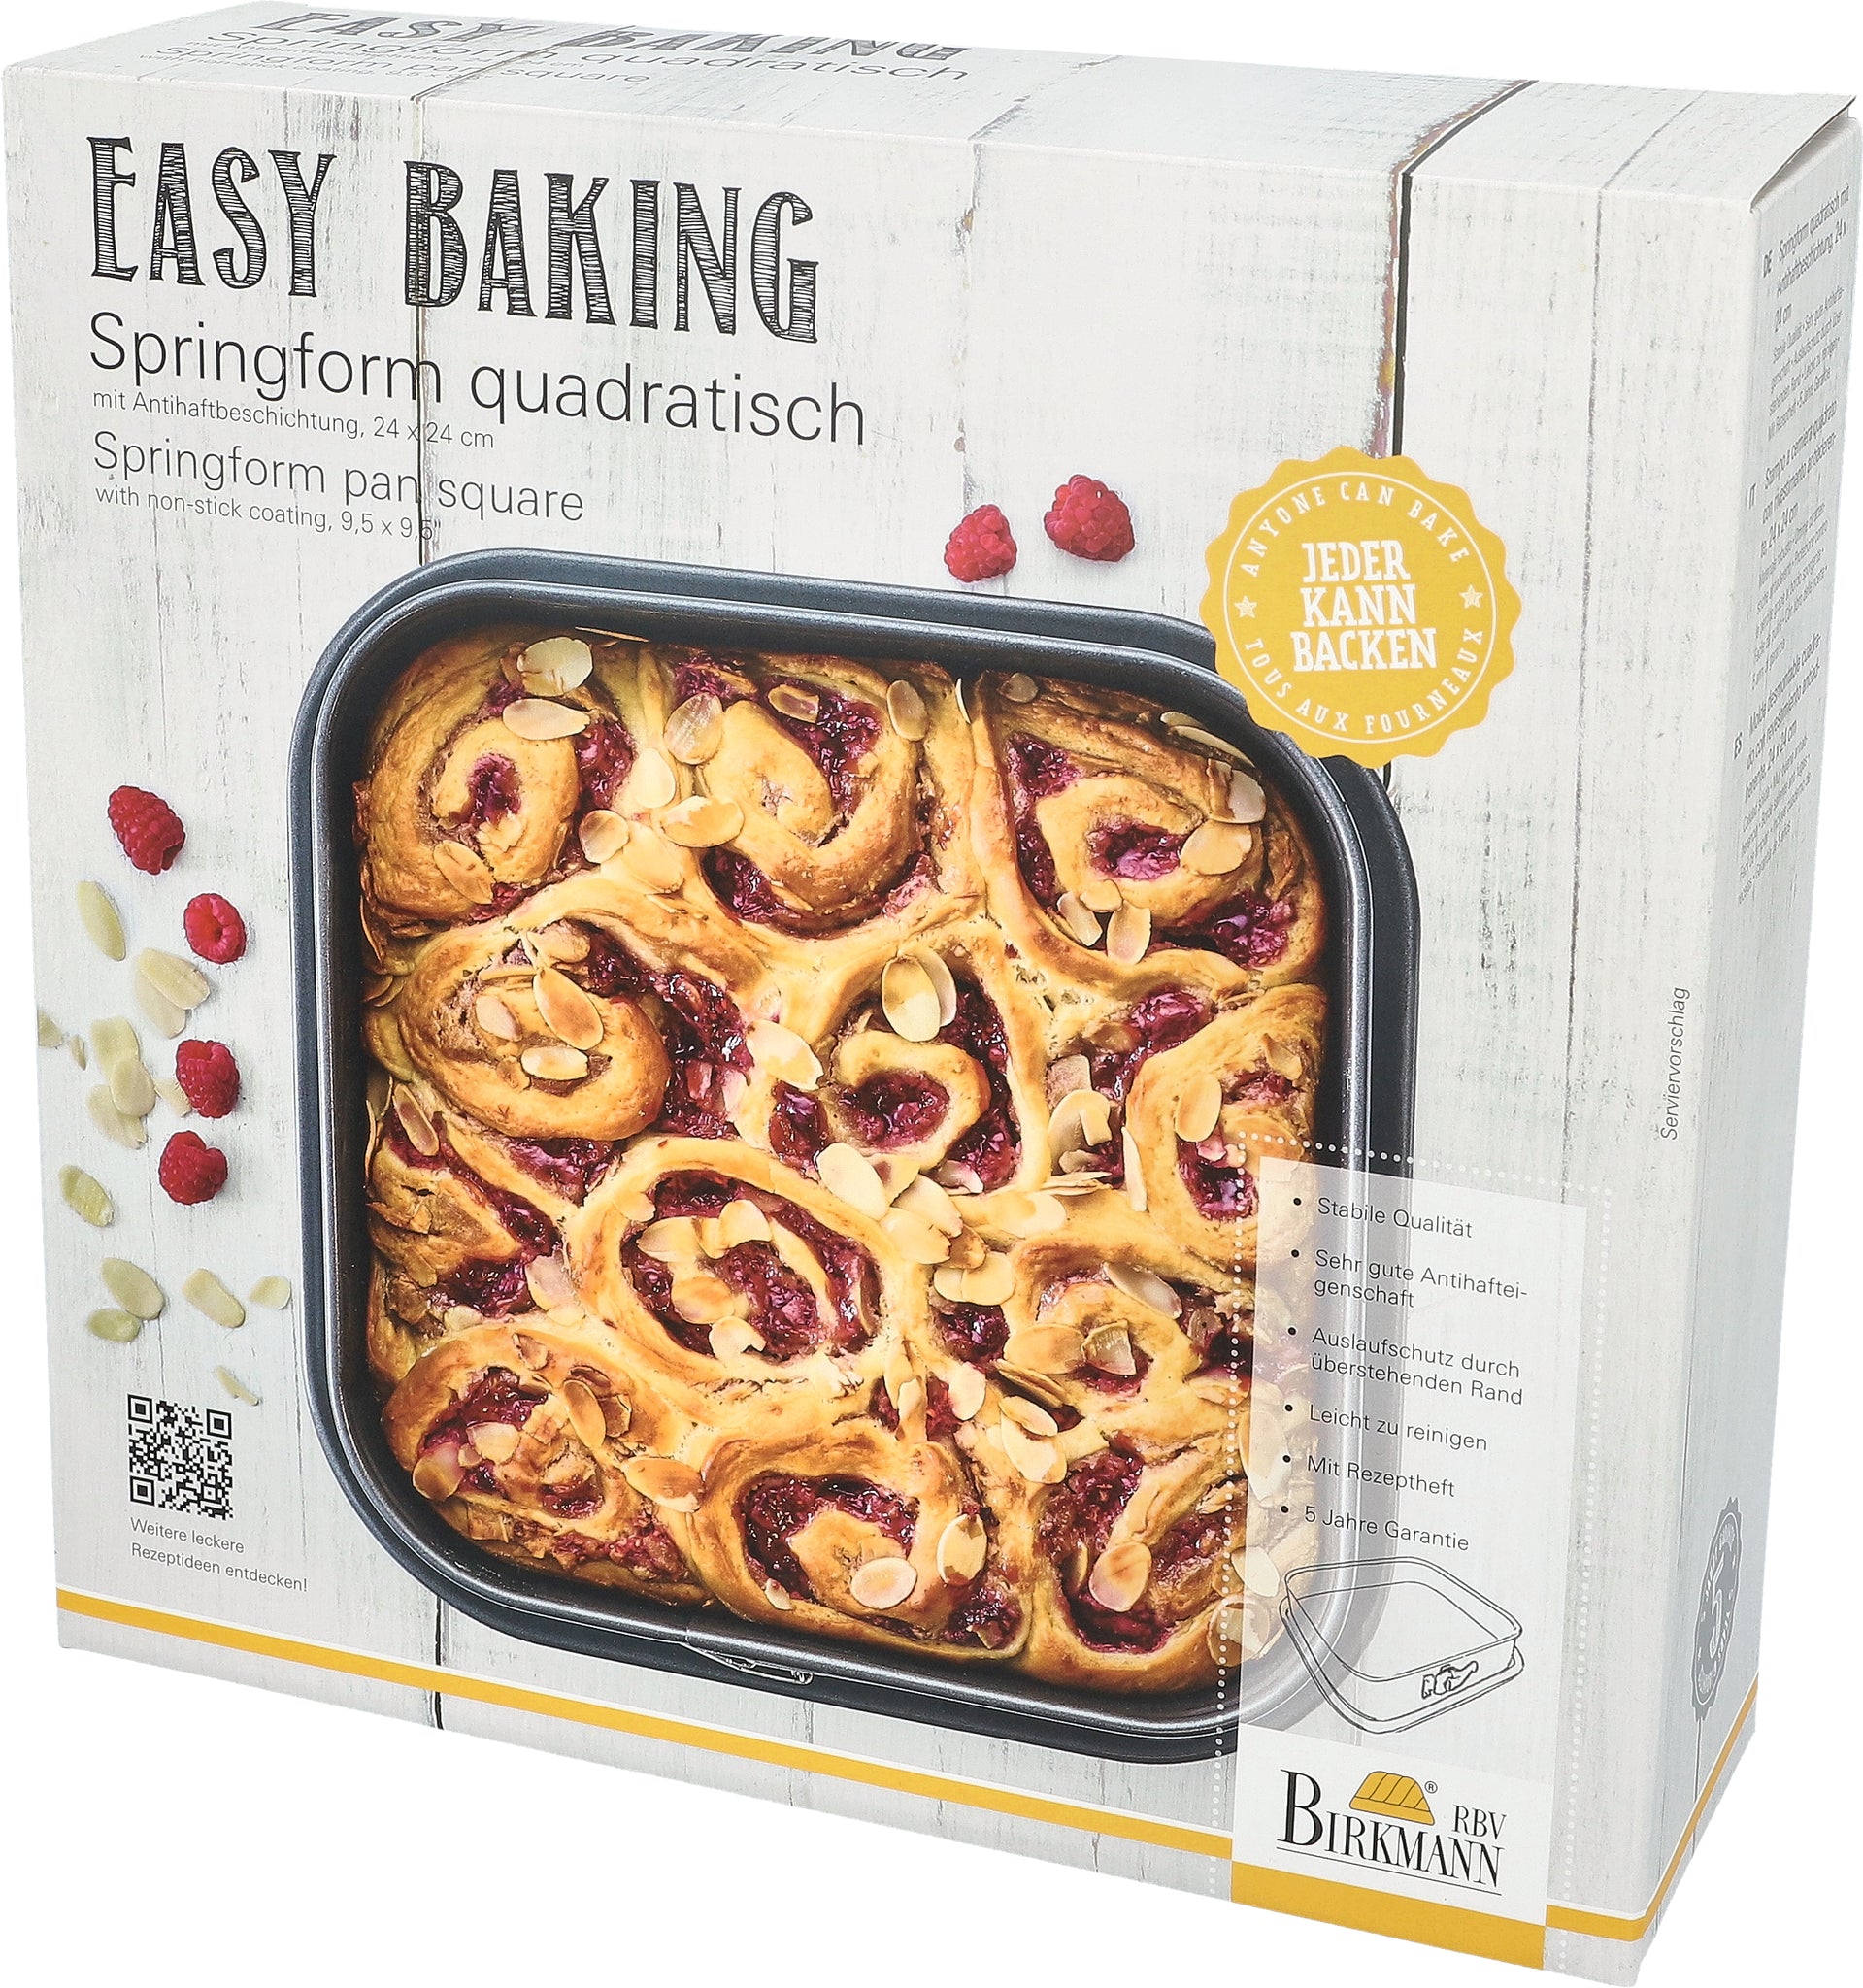 "Easy Baking" Springform Quadratisch 24cm x 24cm -Marken-Antihaftbeschichtung-